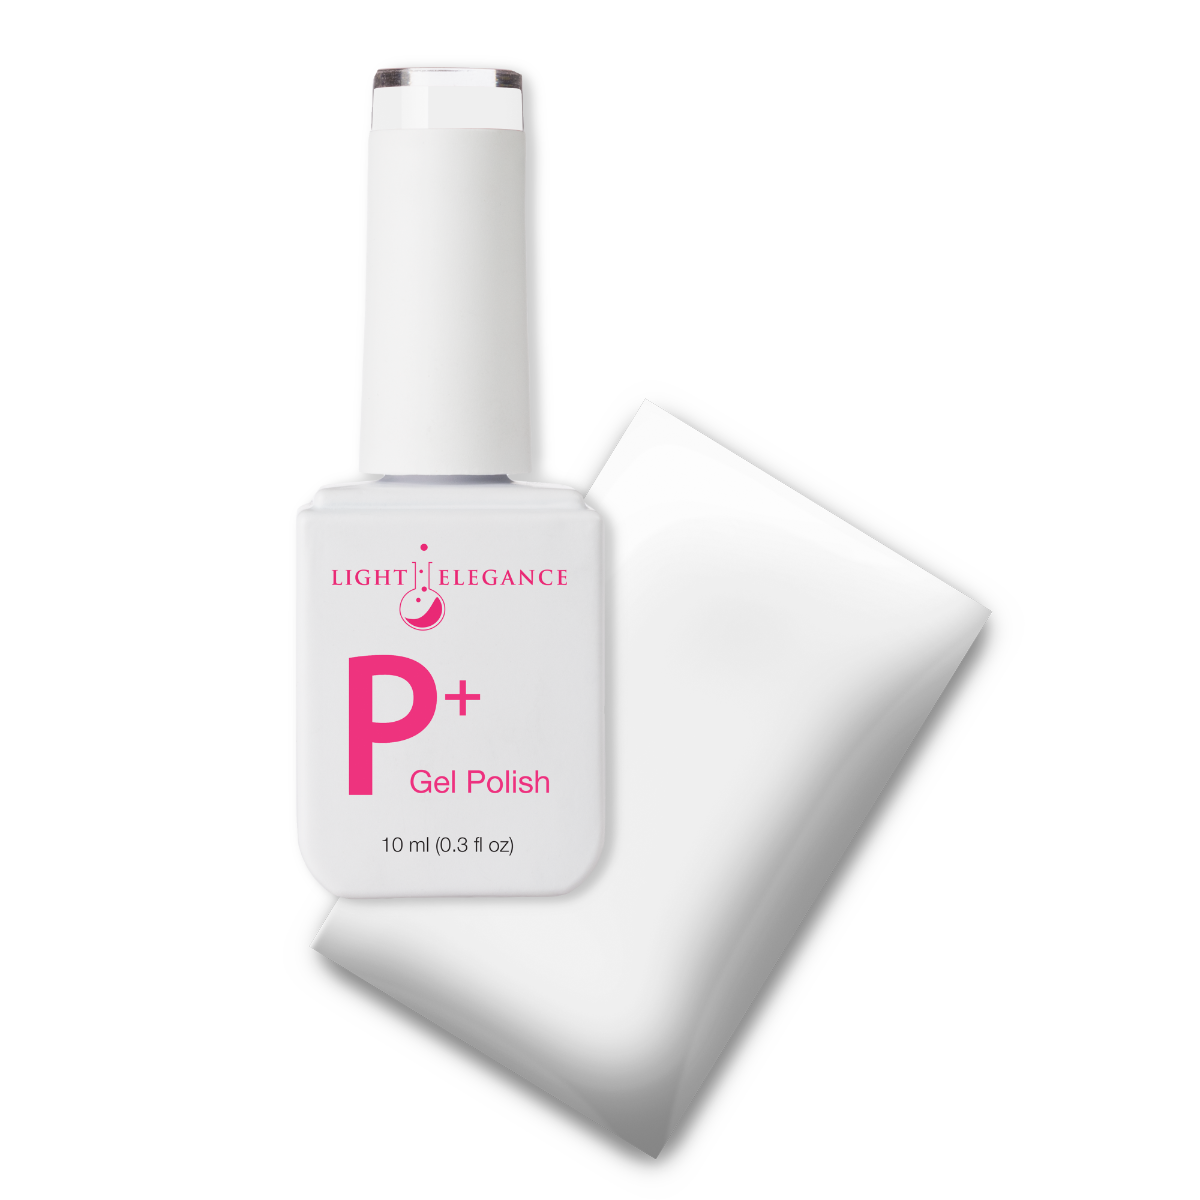 Light Elegance P+ Soak Off Color Gel - Classic White :: New Packaging